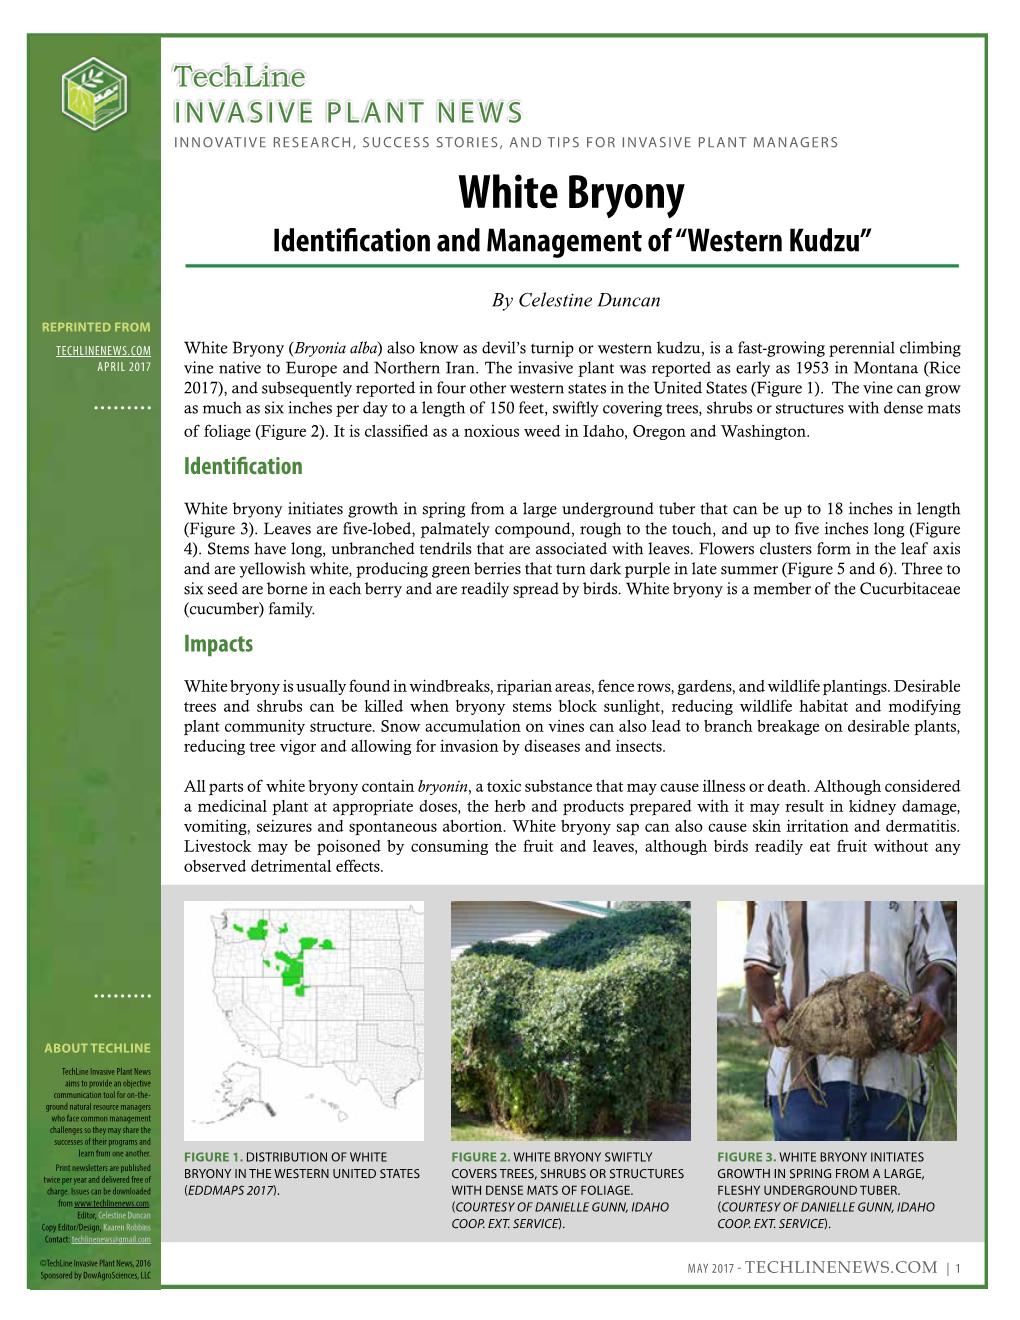 White Bryony Identification and Management of “Western Kudzu”